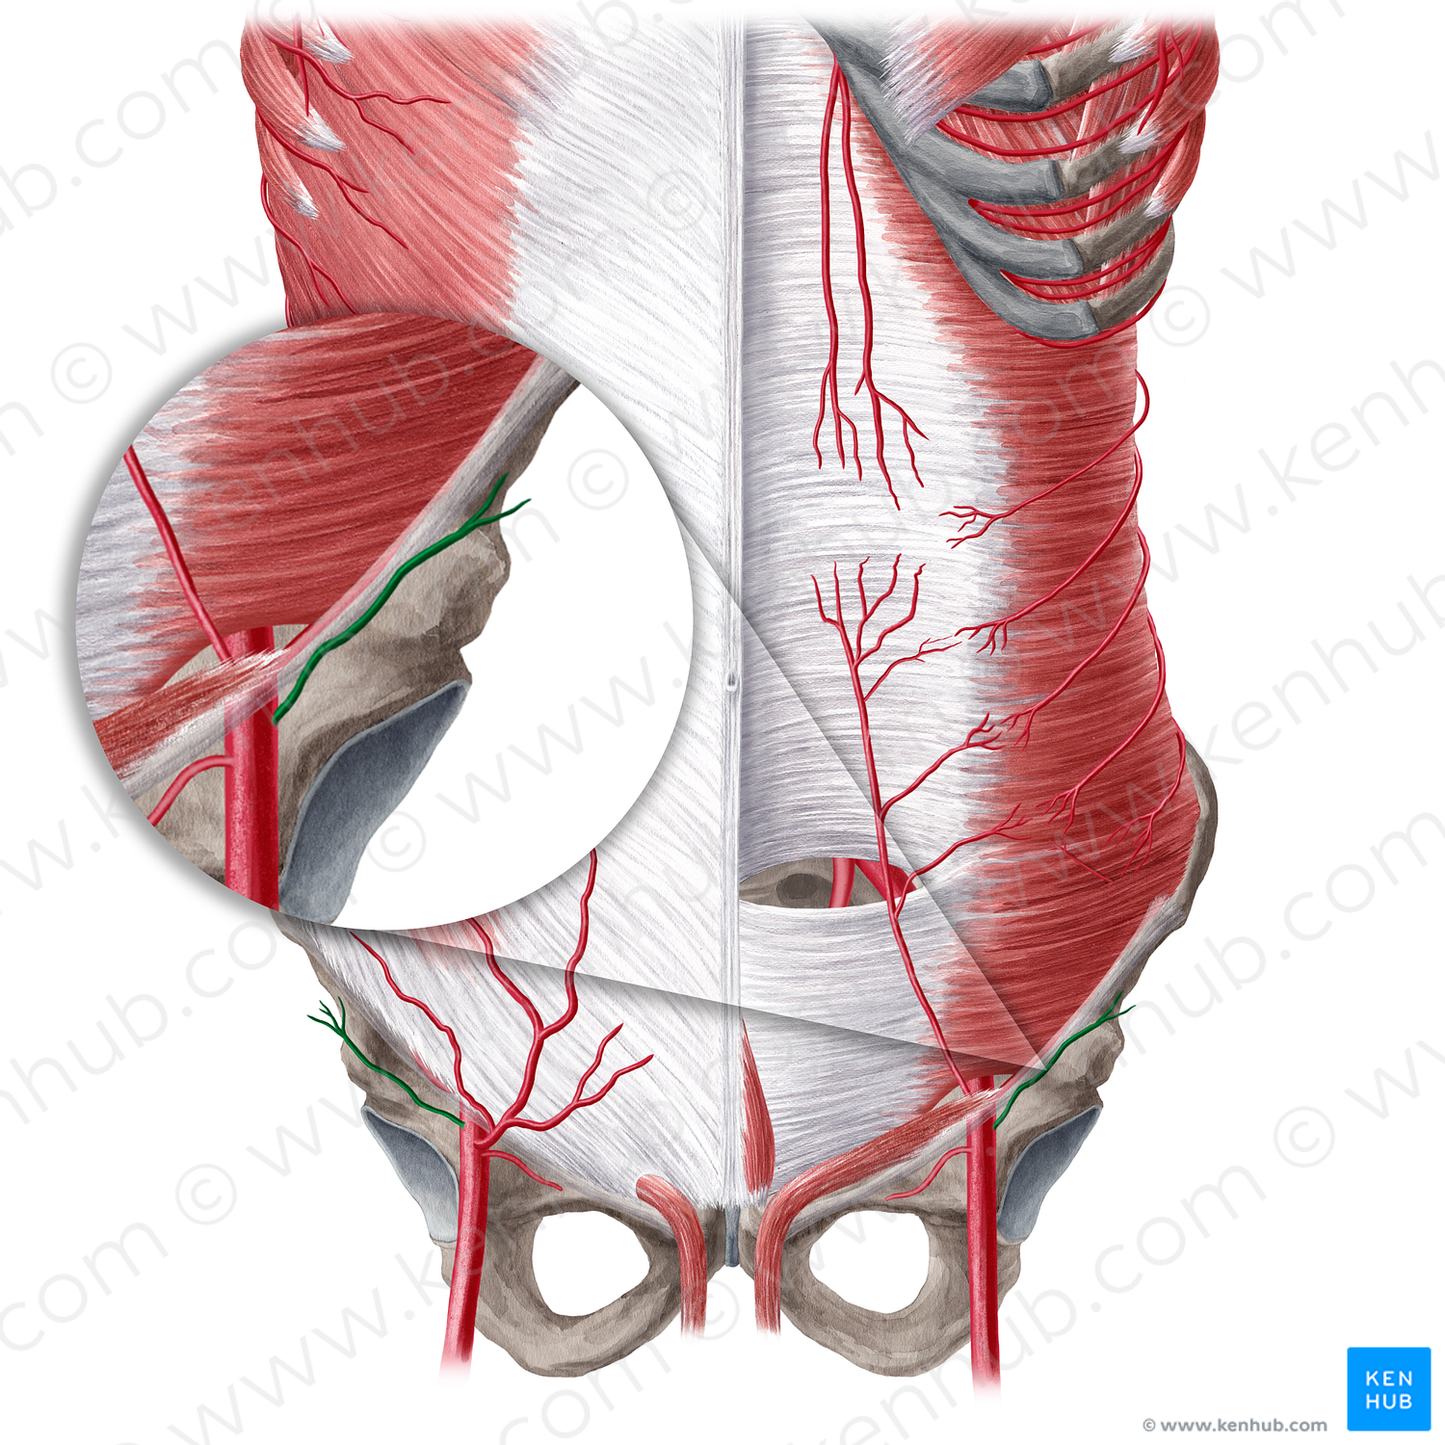 Superficial circumflex iliac artery (#21563)